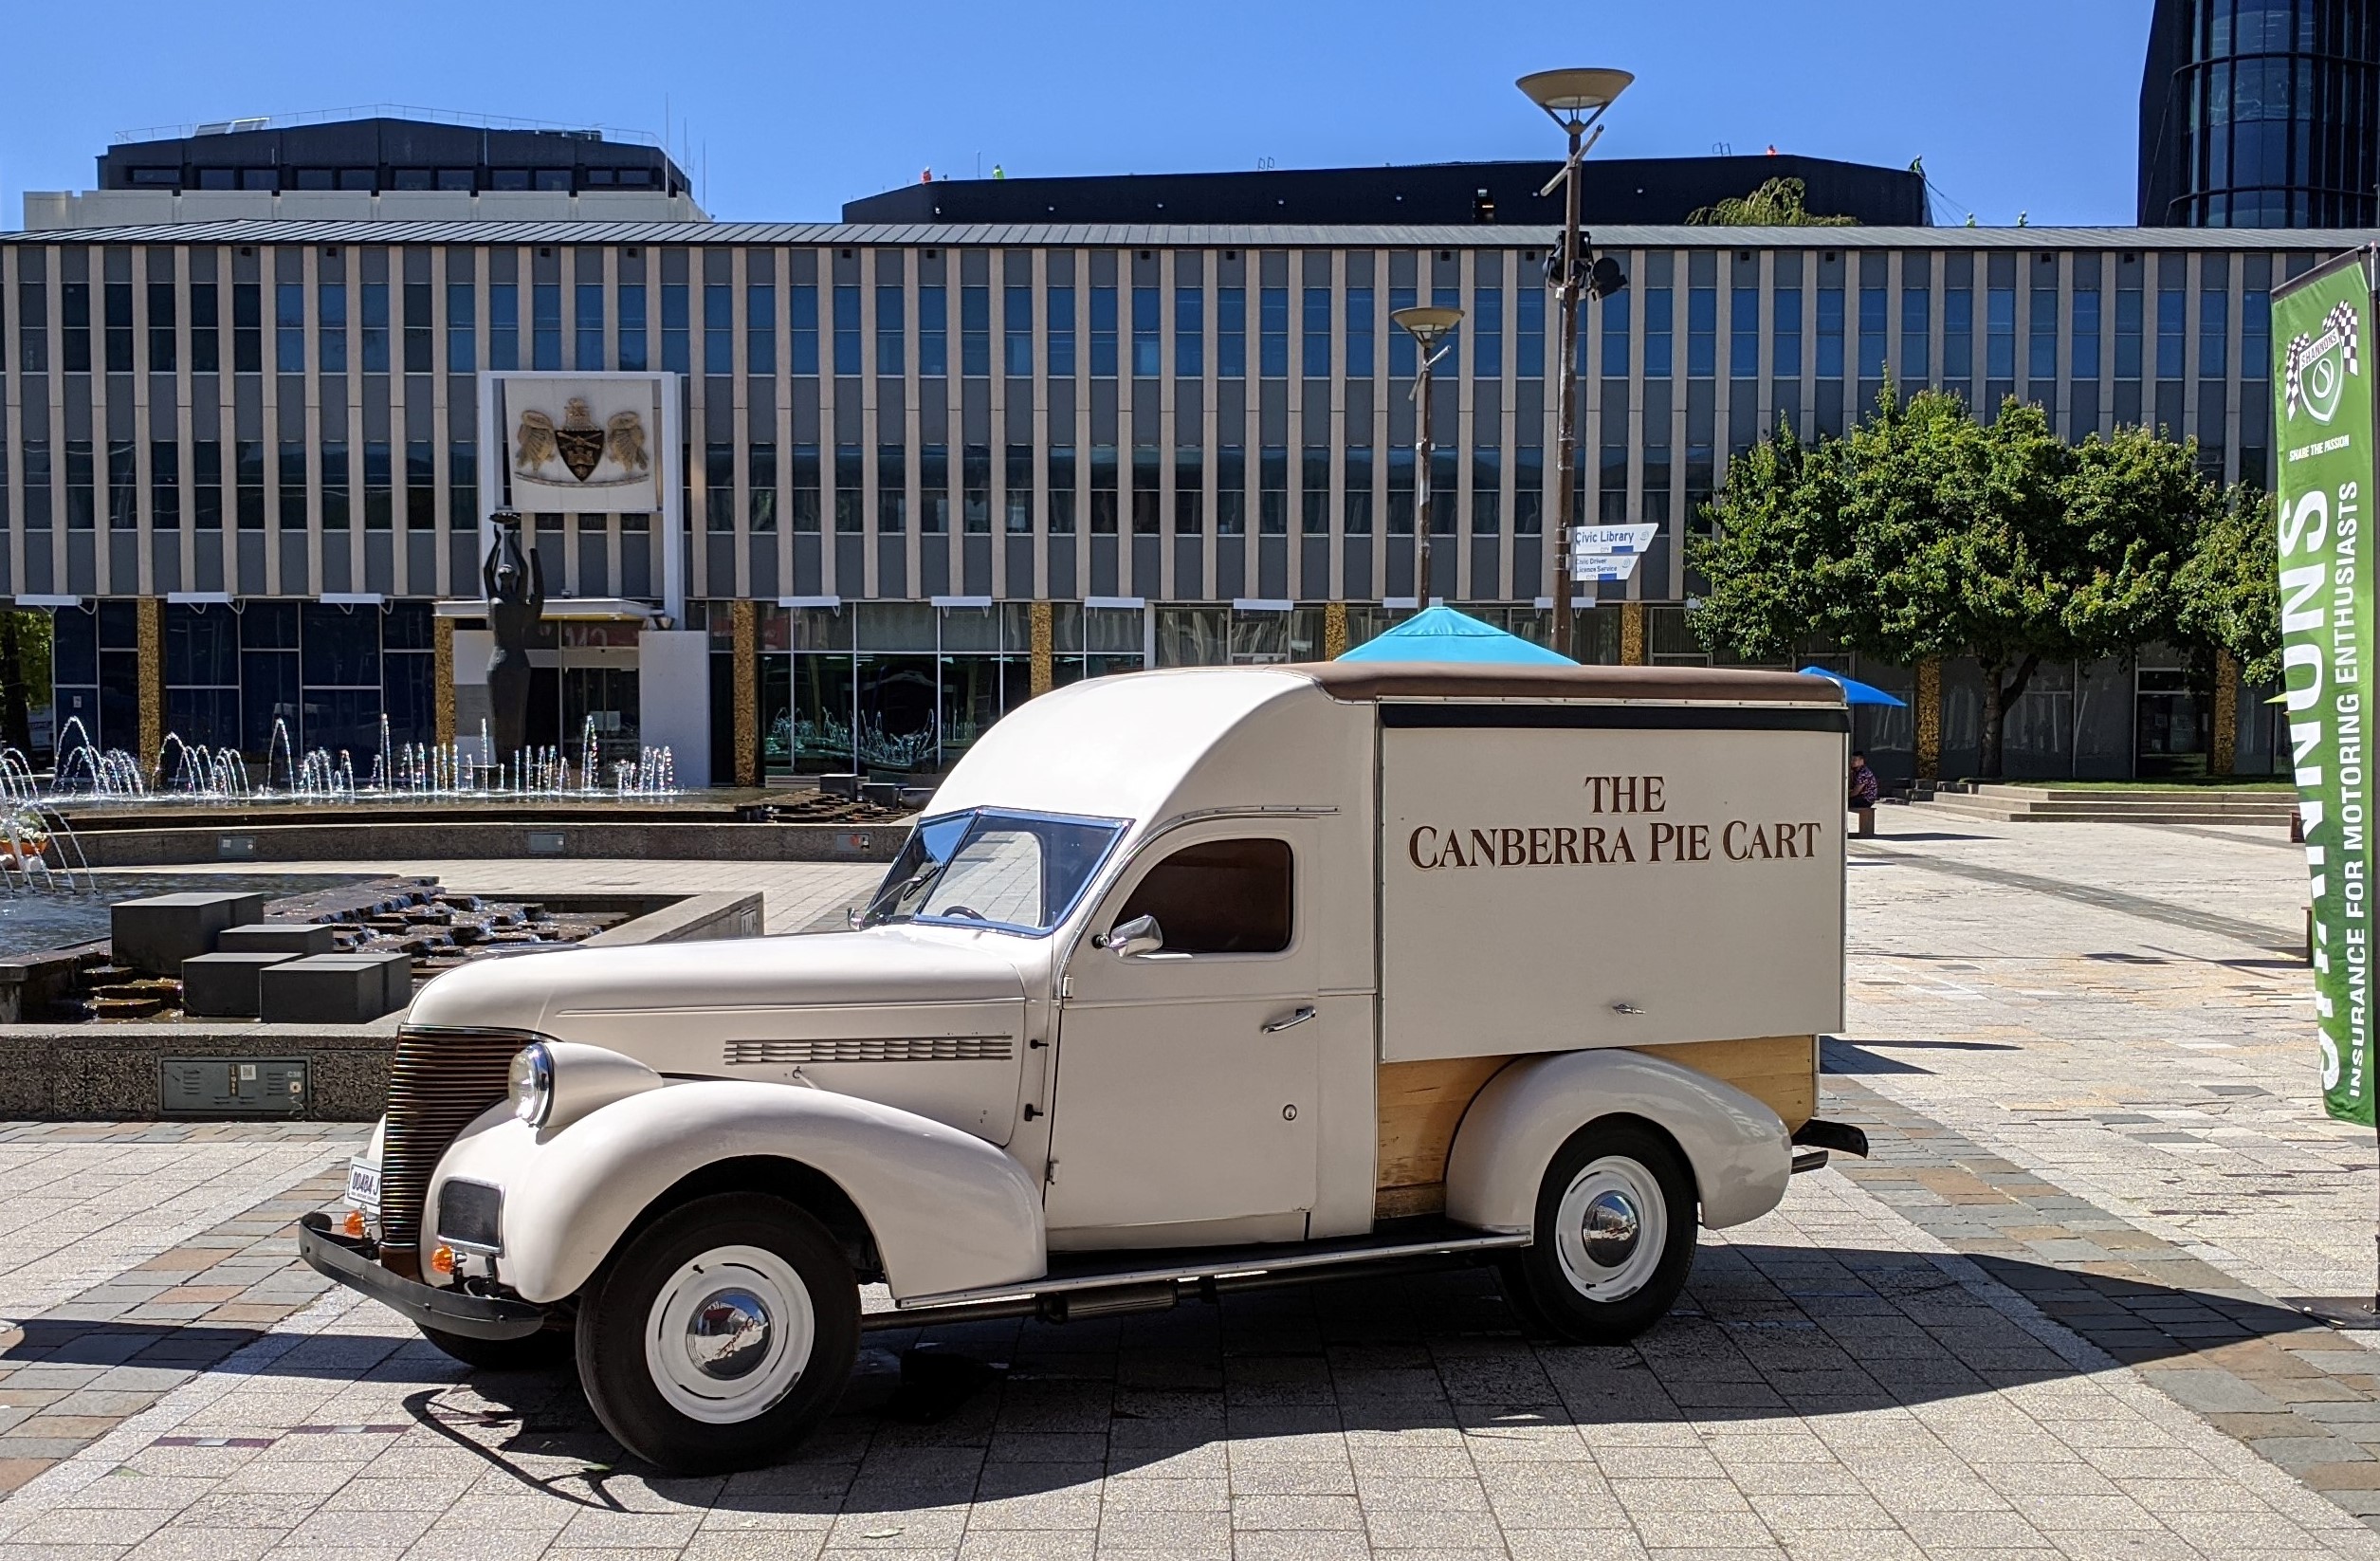 Canberra Pie Cart